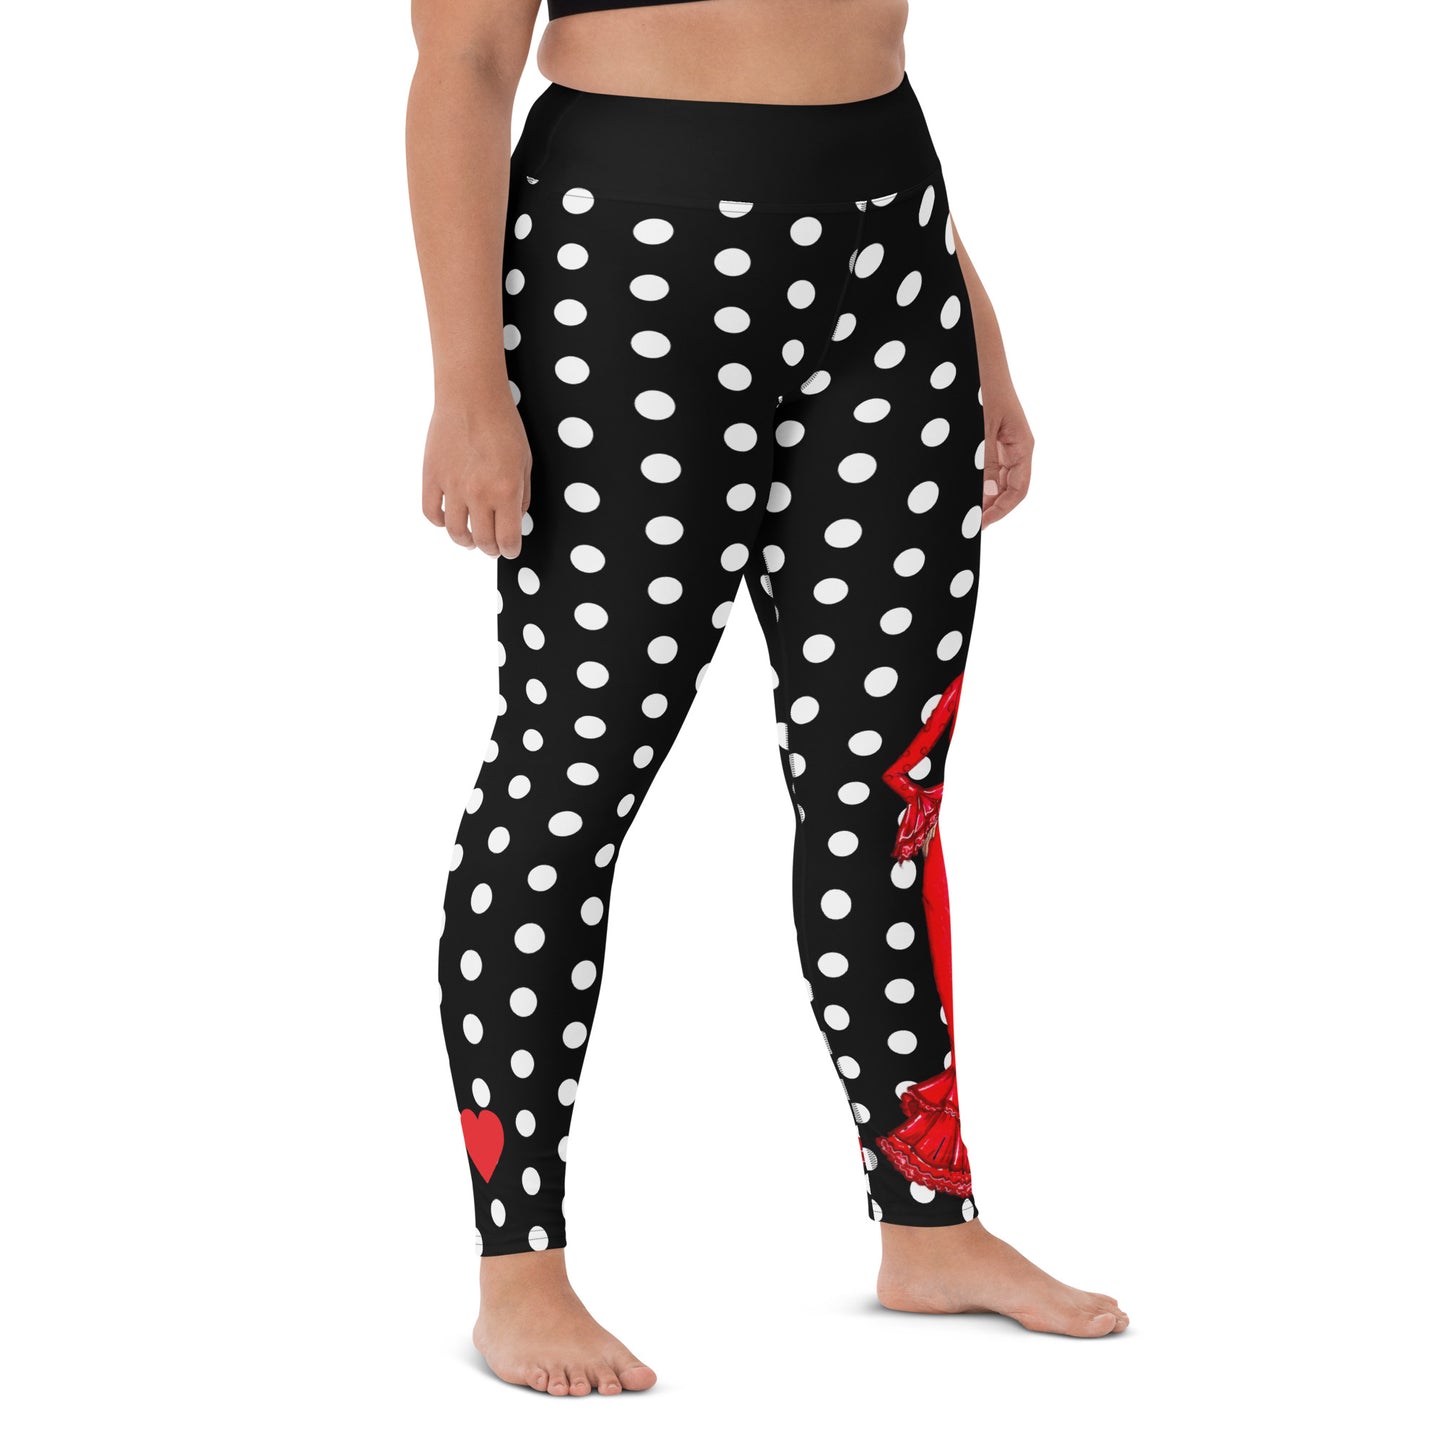 Flamenco Dancer Leggings, black with white polka dots high waisted yoga leggings with a red dress design - IllustrArte